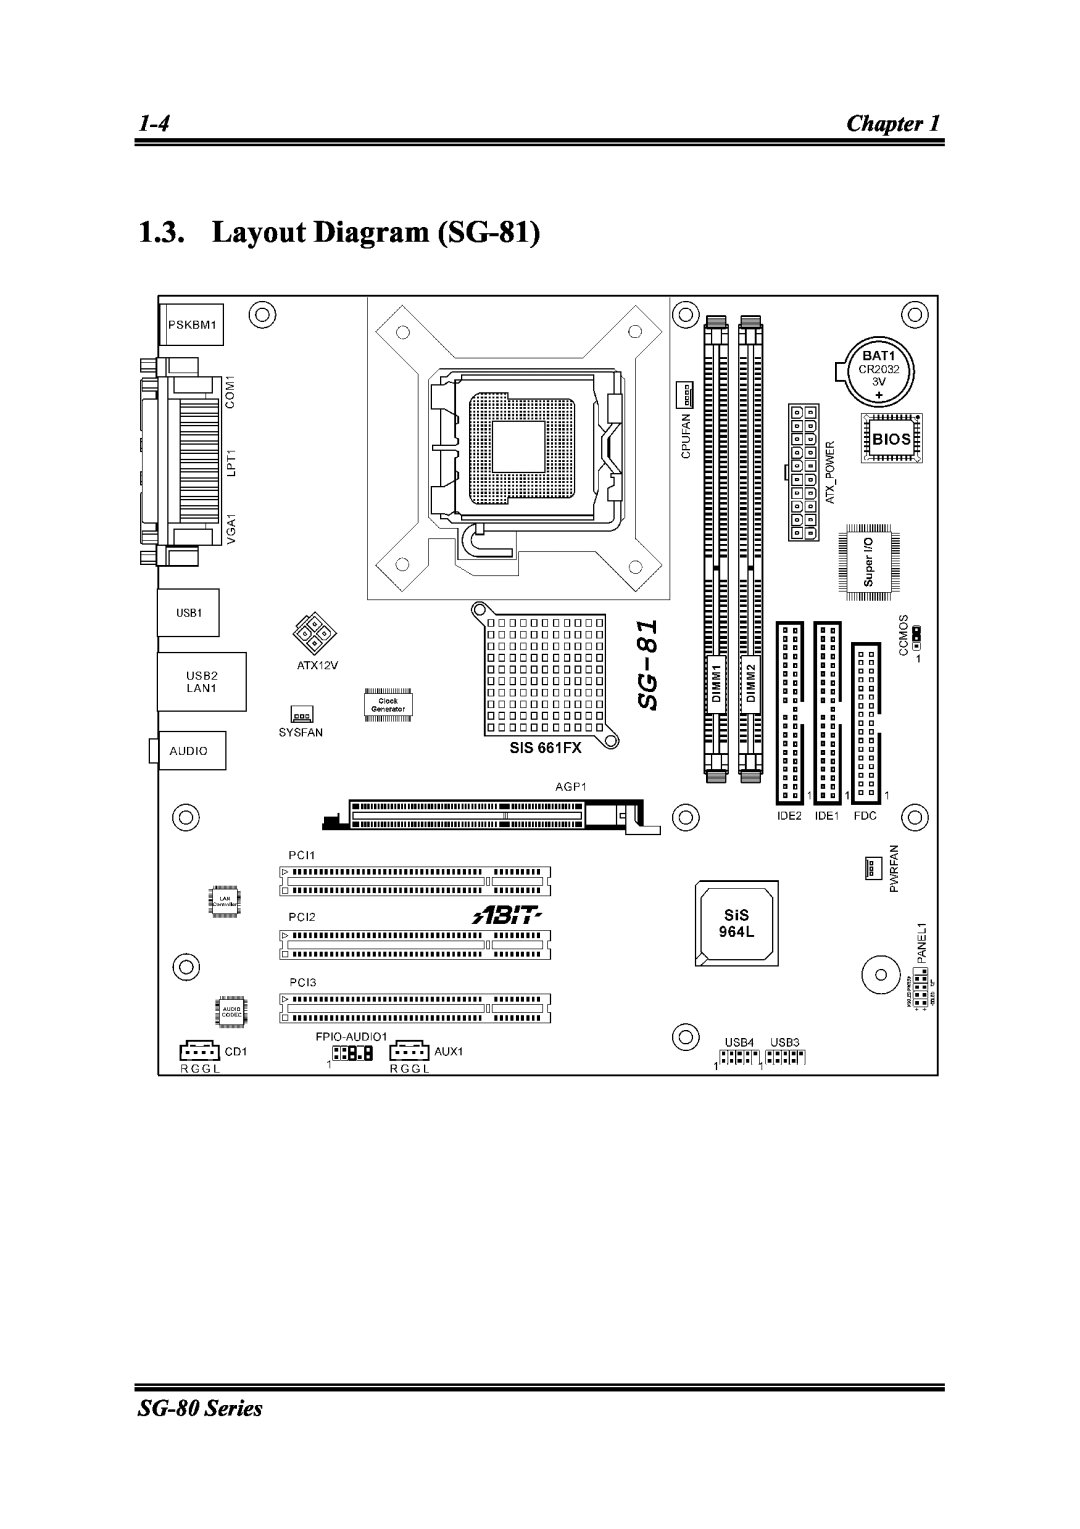 Intel user manual Layout Diagram SG-81, SG-80Series 